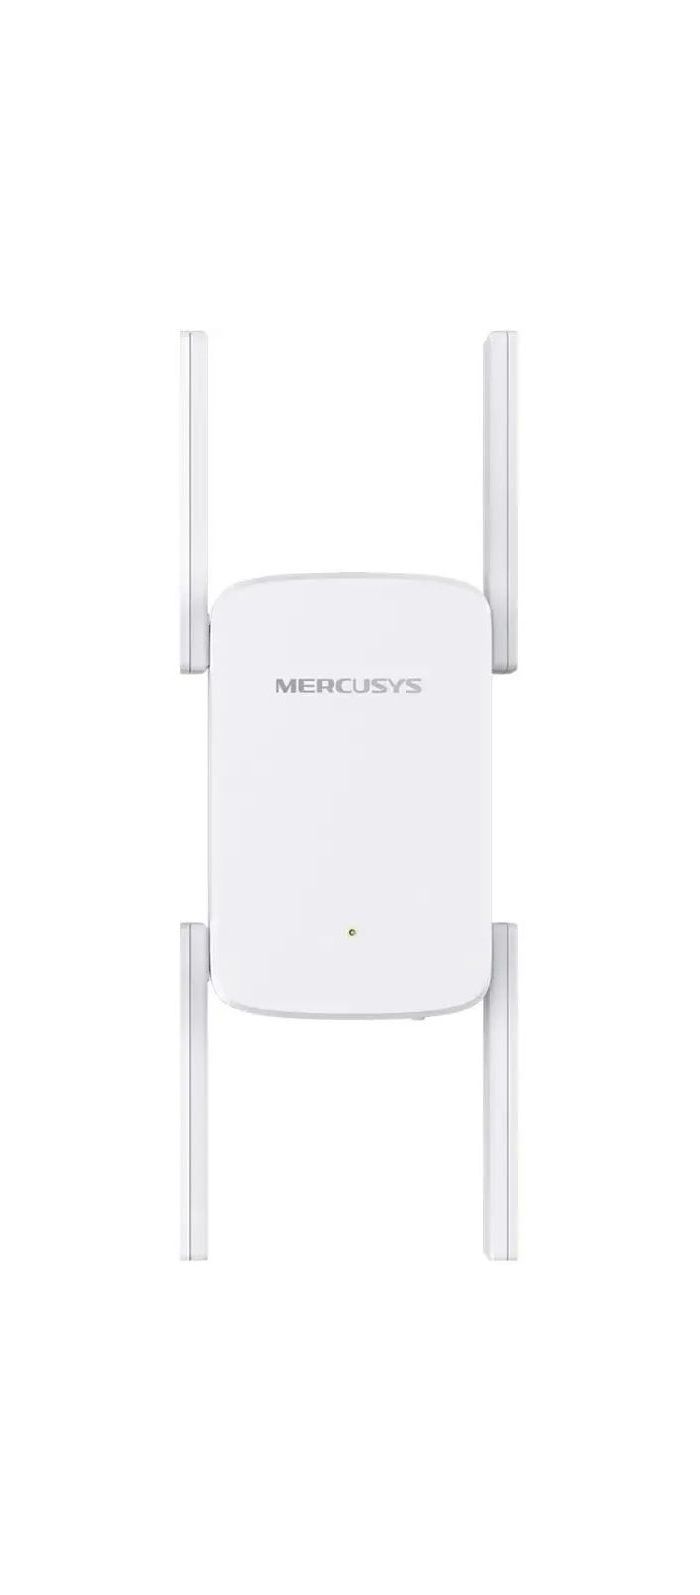 Усилитель Wi-Fi сигнала Mercusys ME50G фотографии